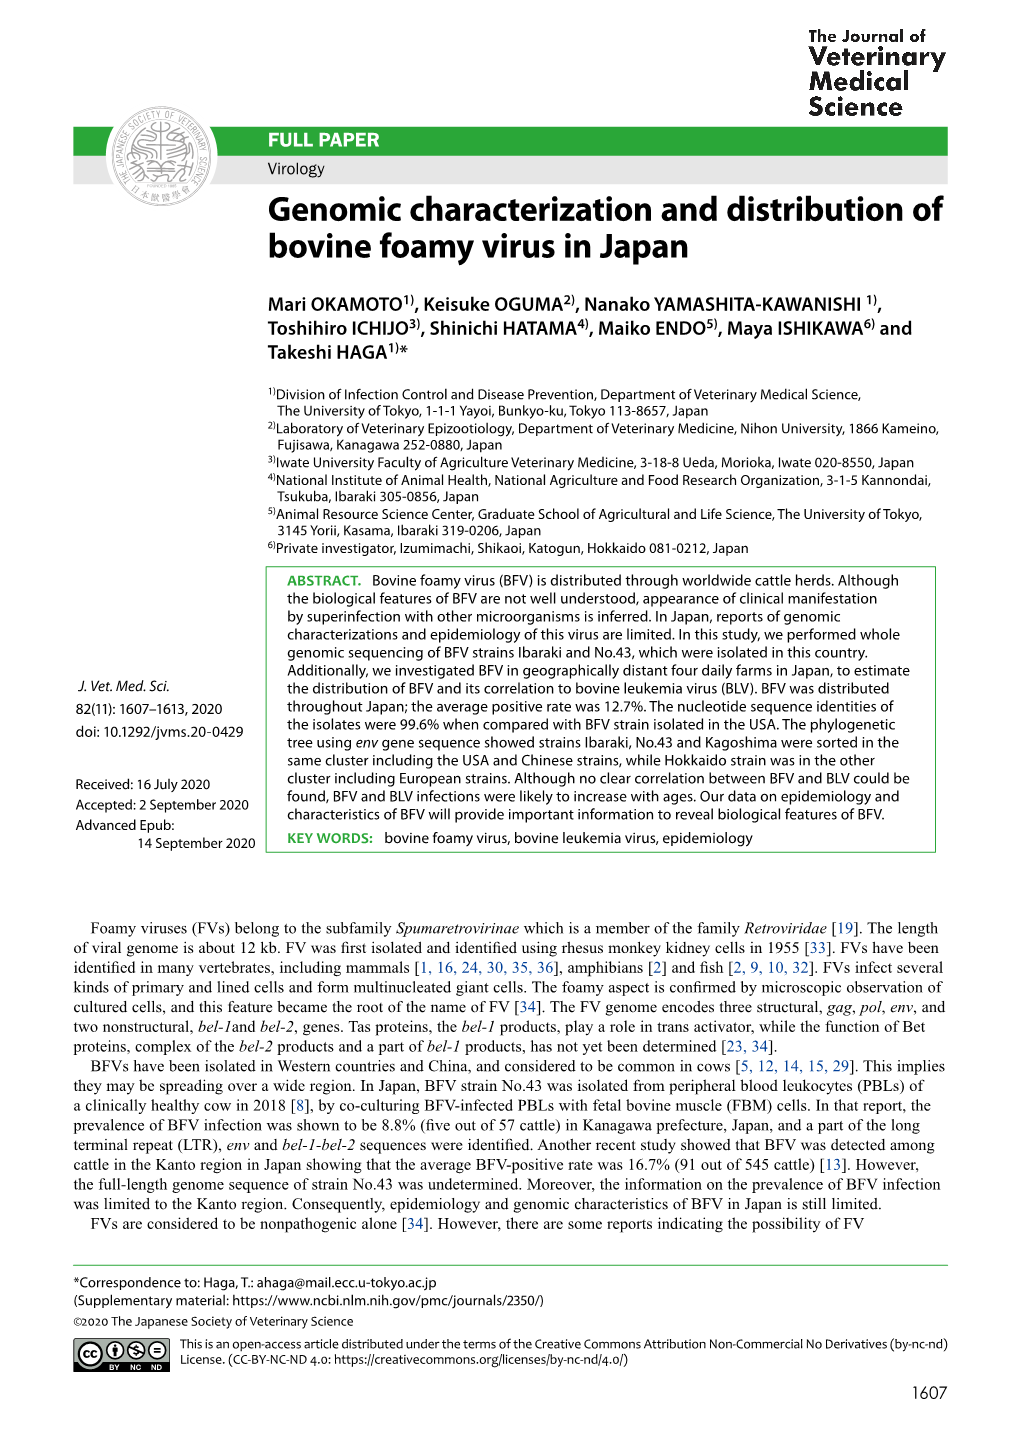 Genomic Characterization and Distribution of Bovine Foamy Virus in Japan